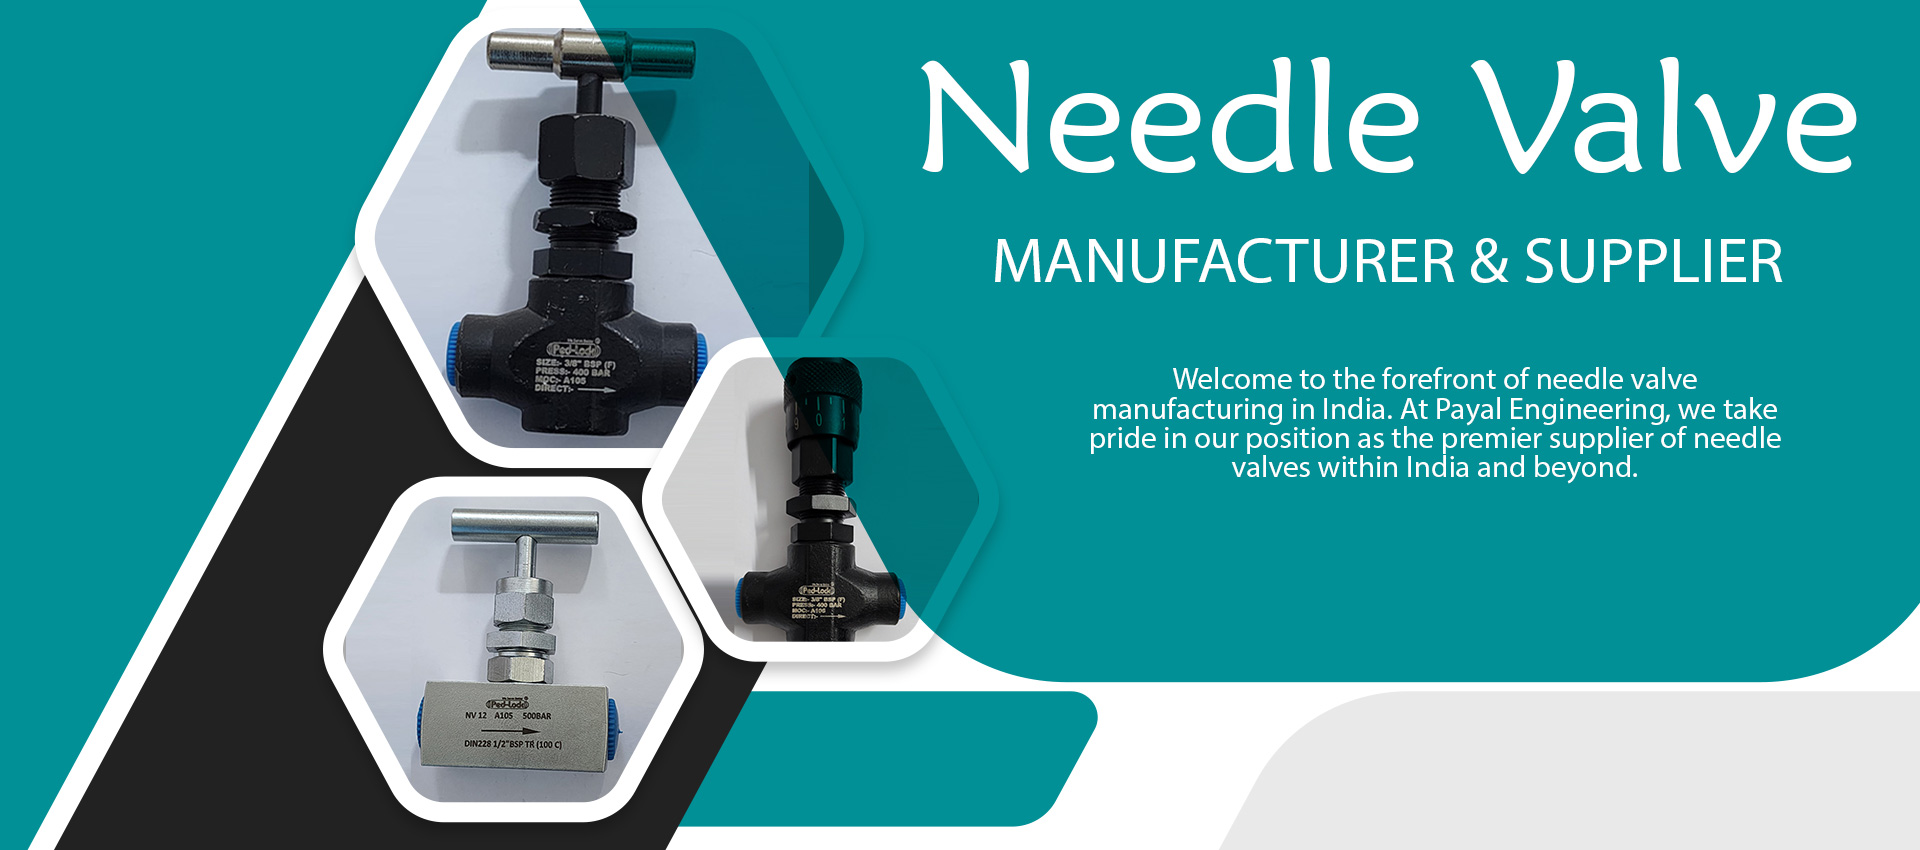 Needle Valve Manufacturer